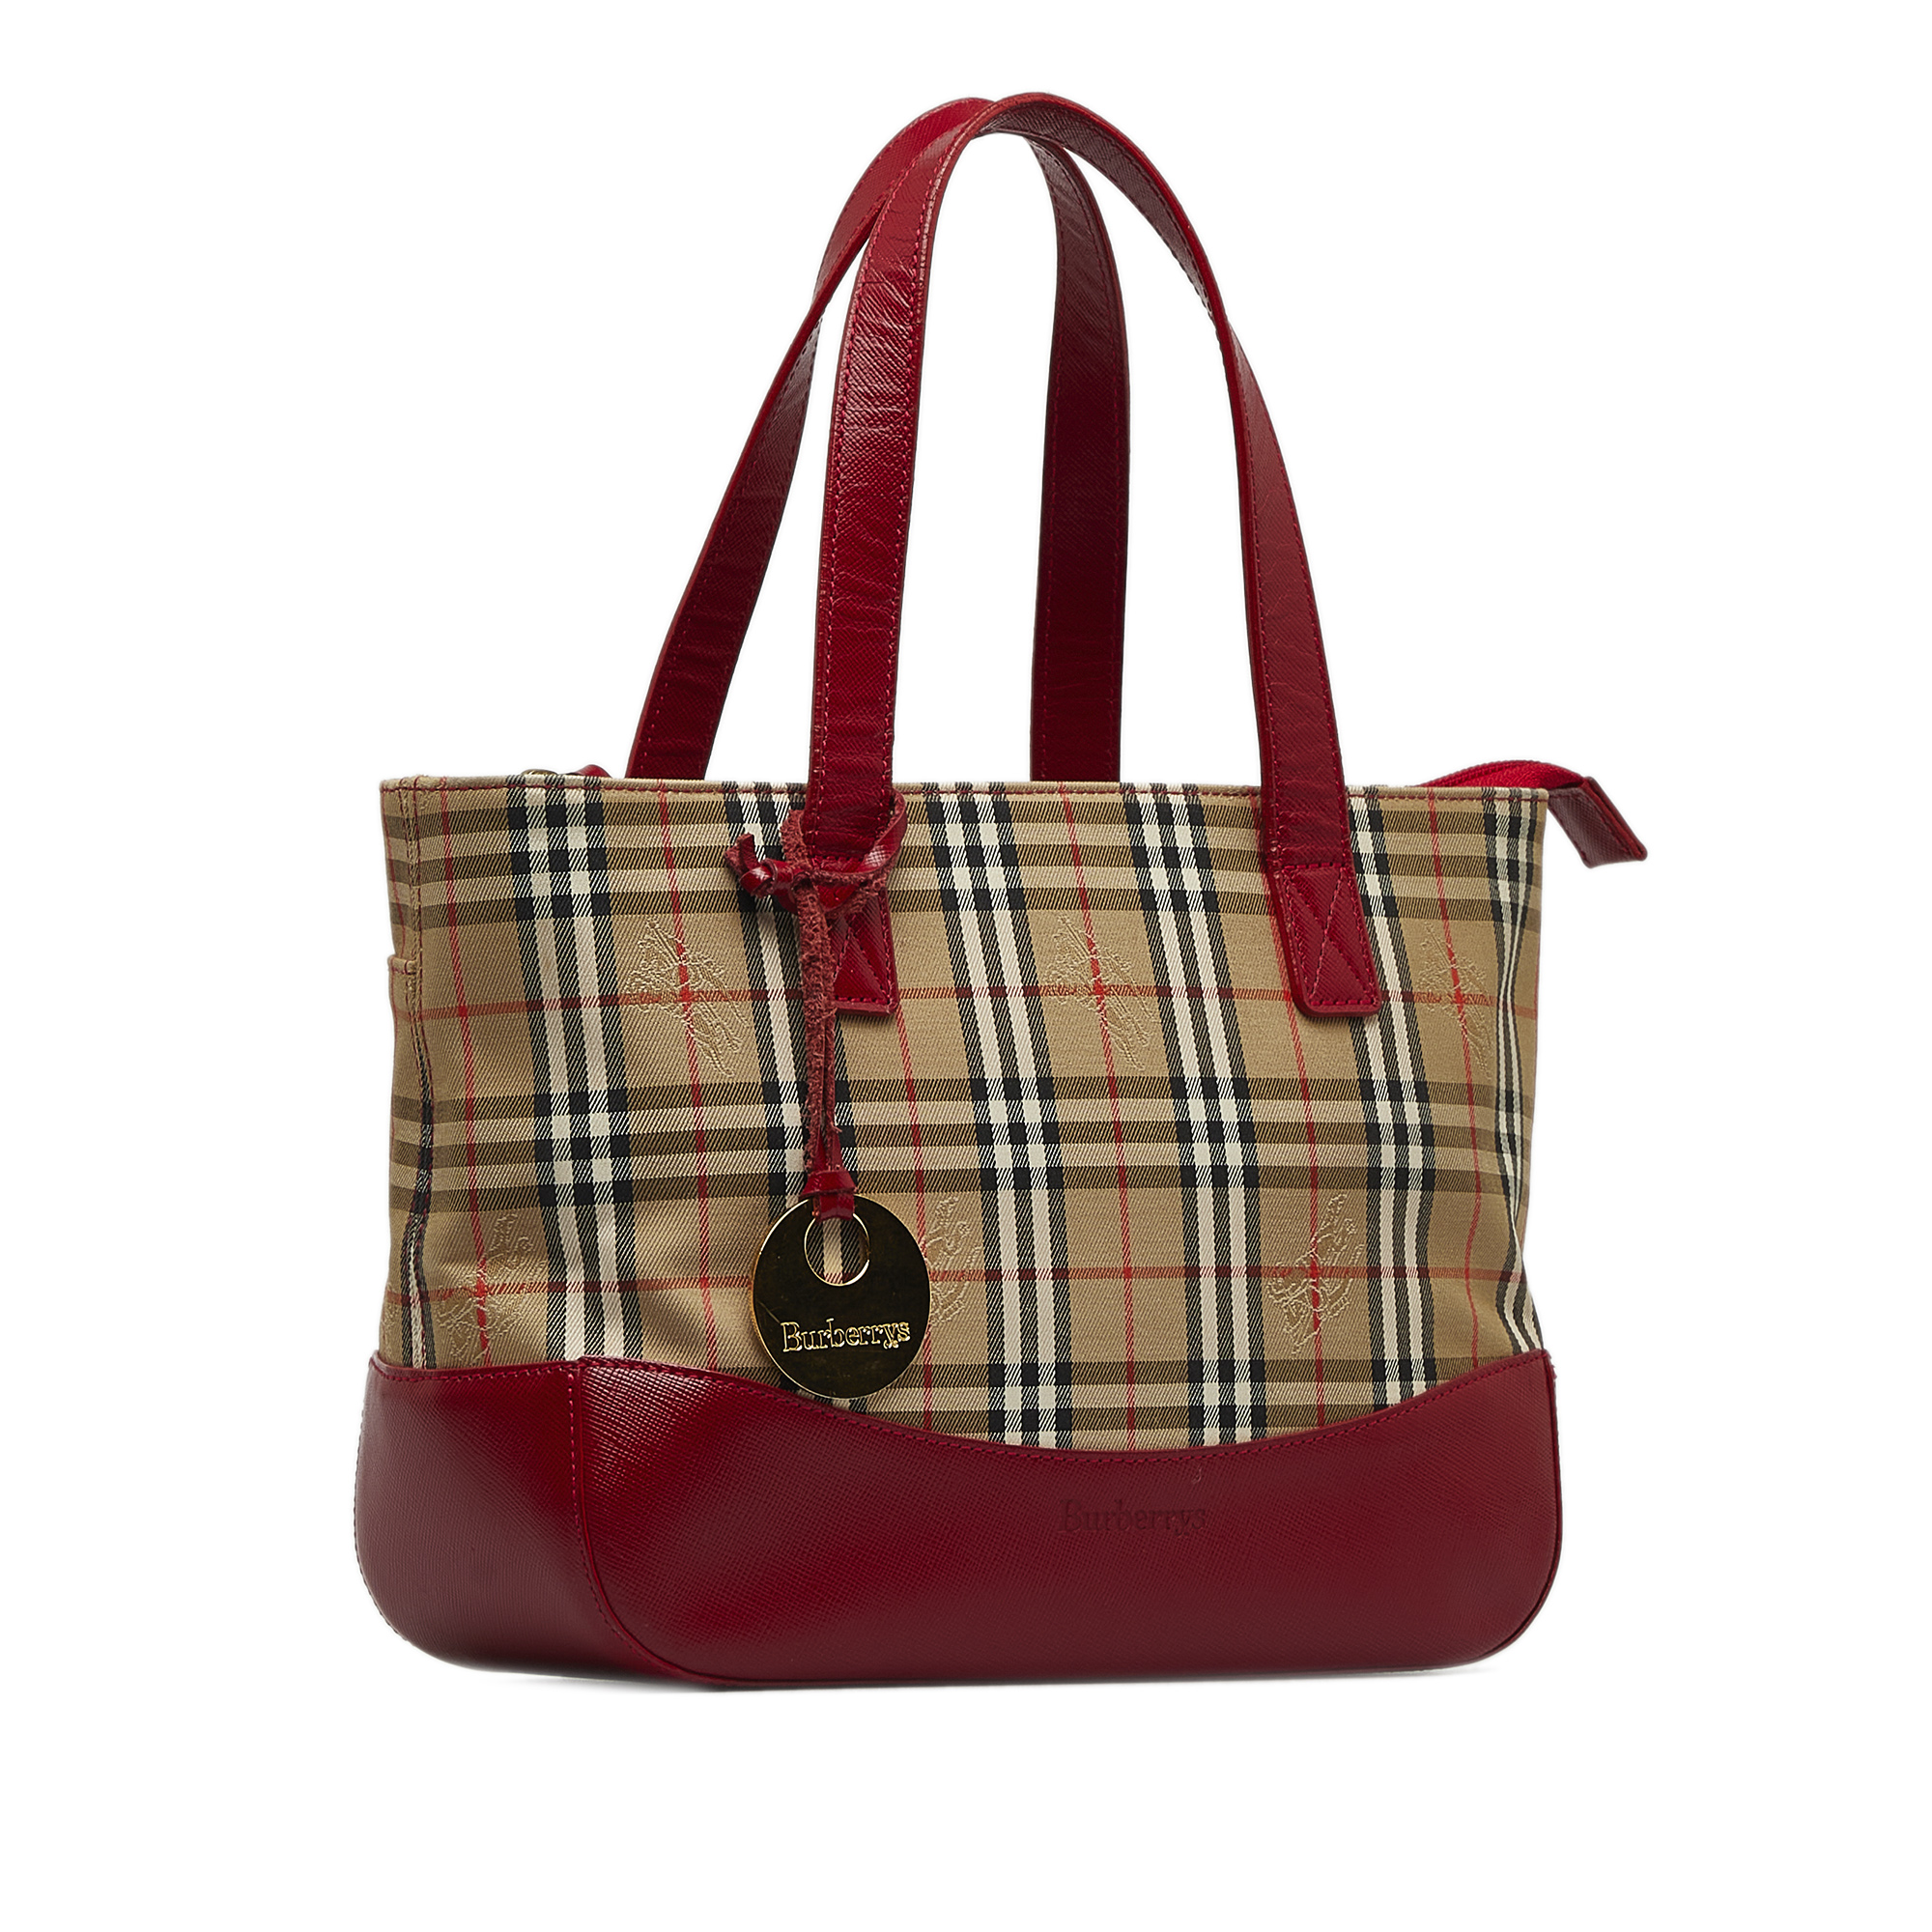 Burberry Haymarket Check Handbag - Image 2 of 9